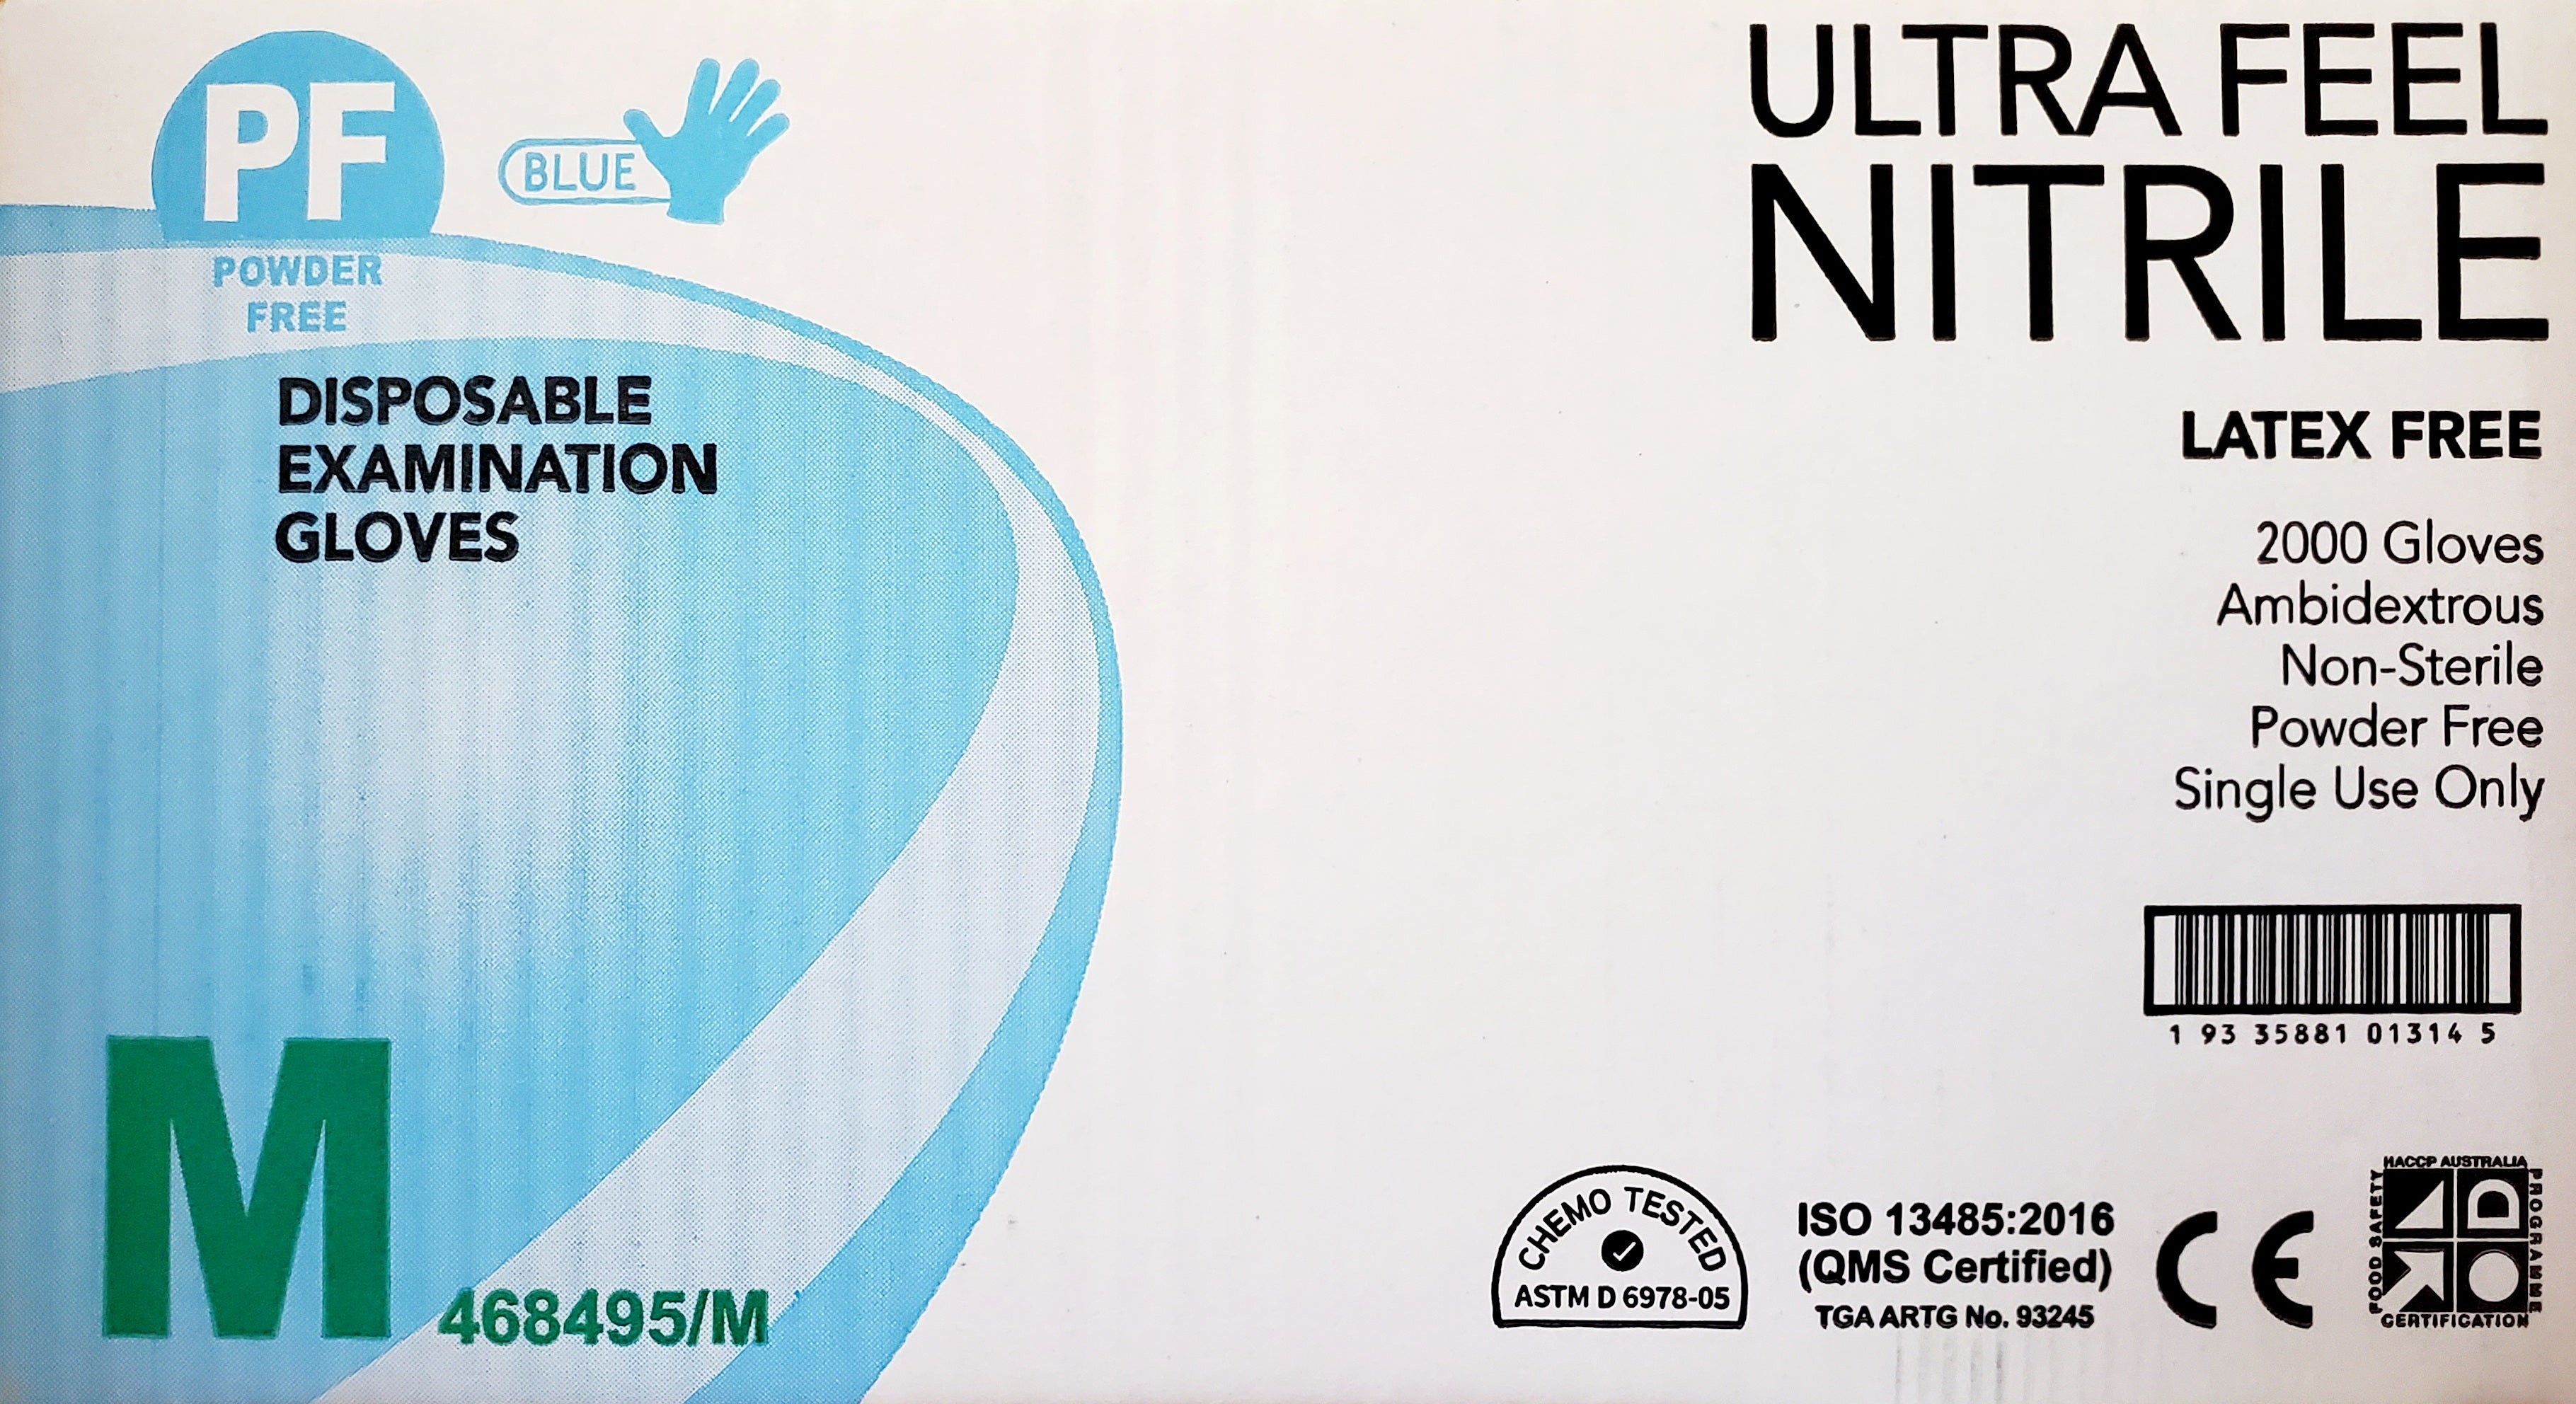 Ultra Feel Nitrile Disposable Gloves 200pcs Latex & Powder Free